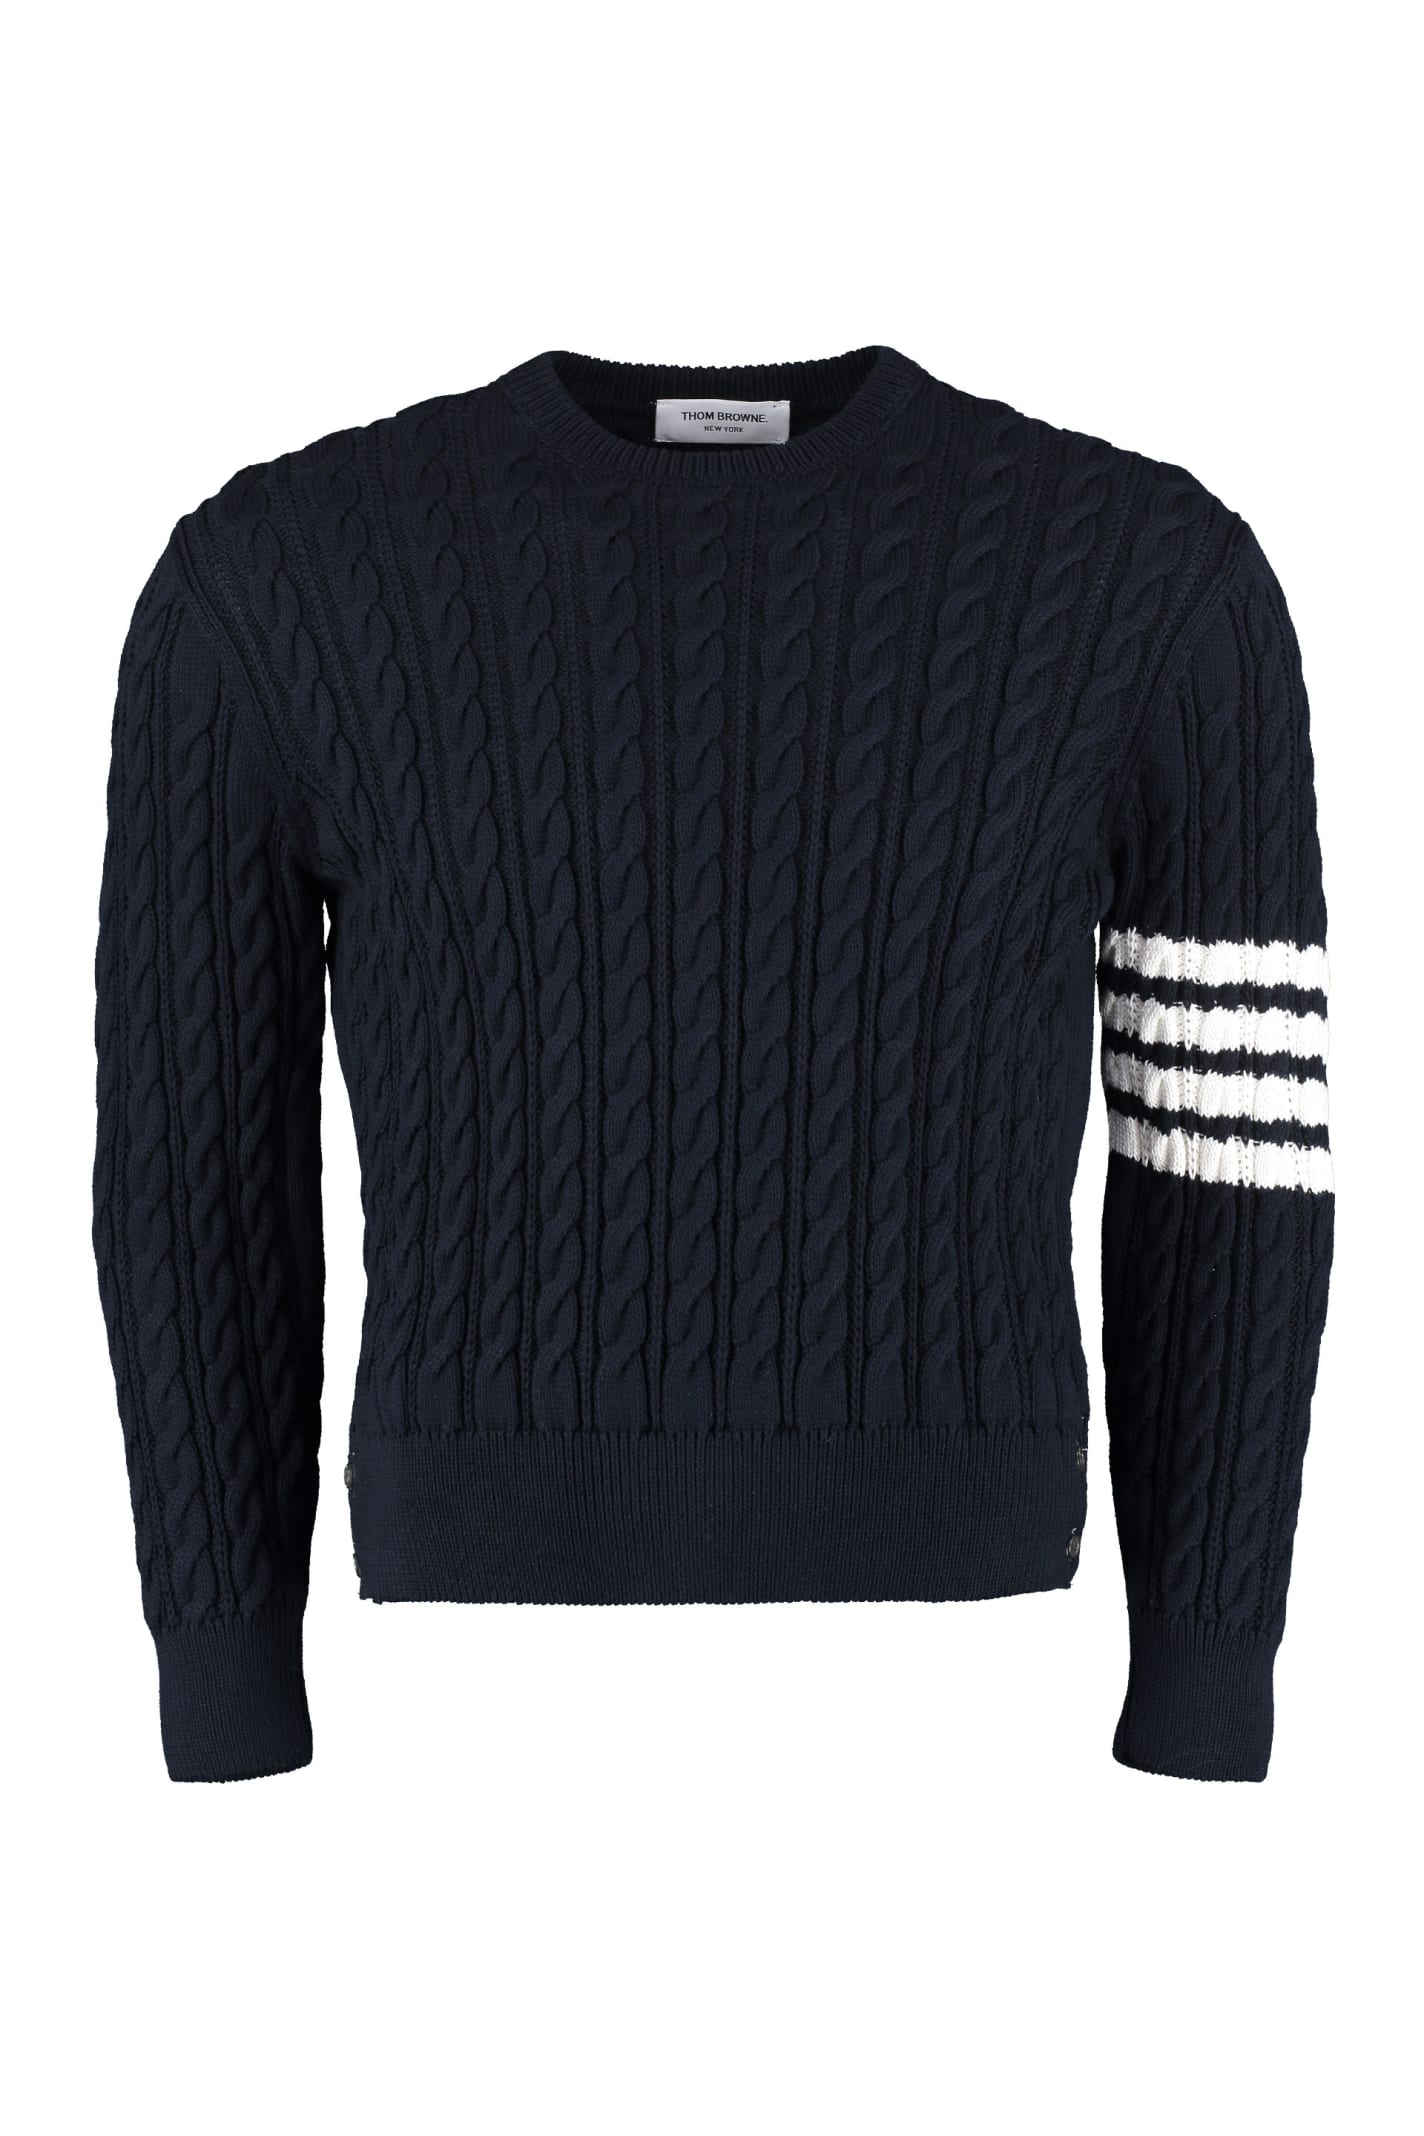 Thom Browne Long Sleeve Crew-neck Sweater